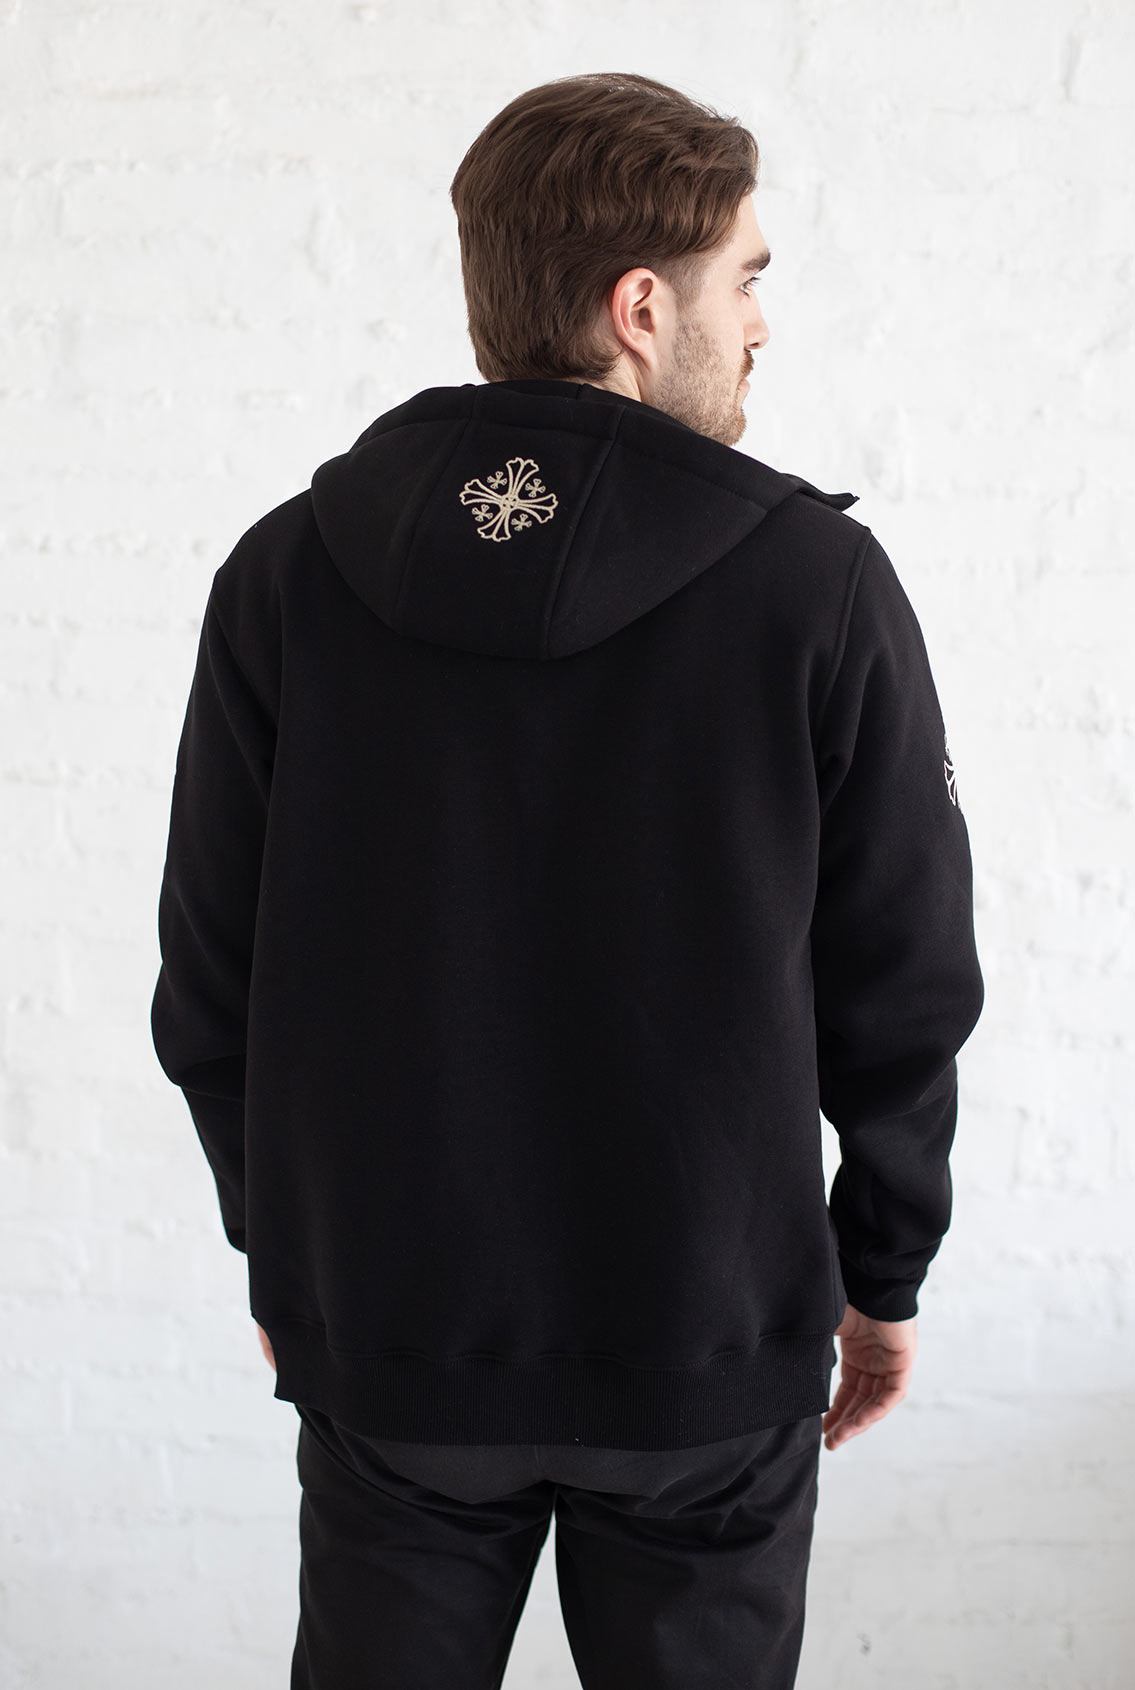 Black hoodie with gray cross